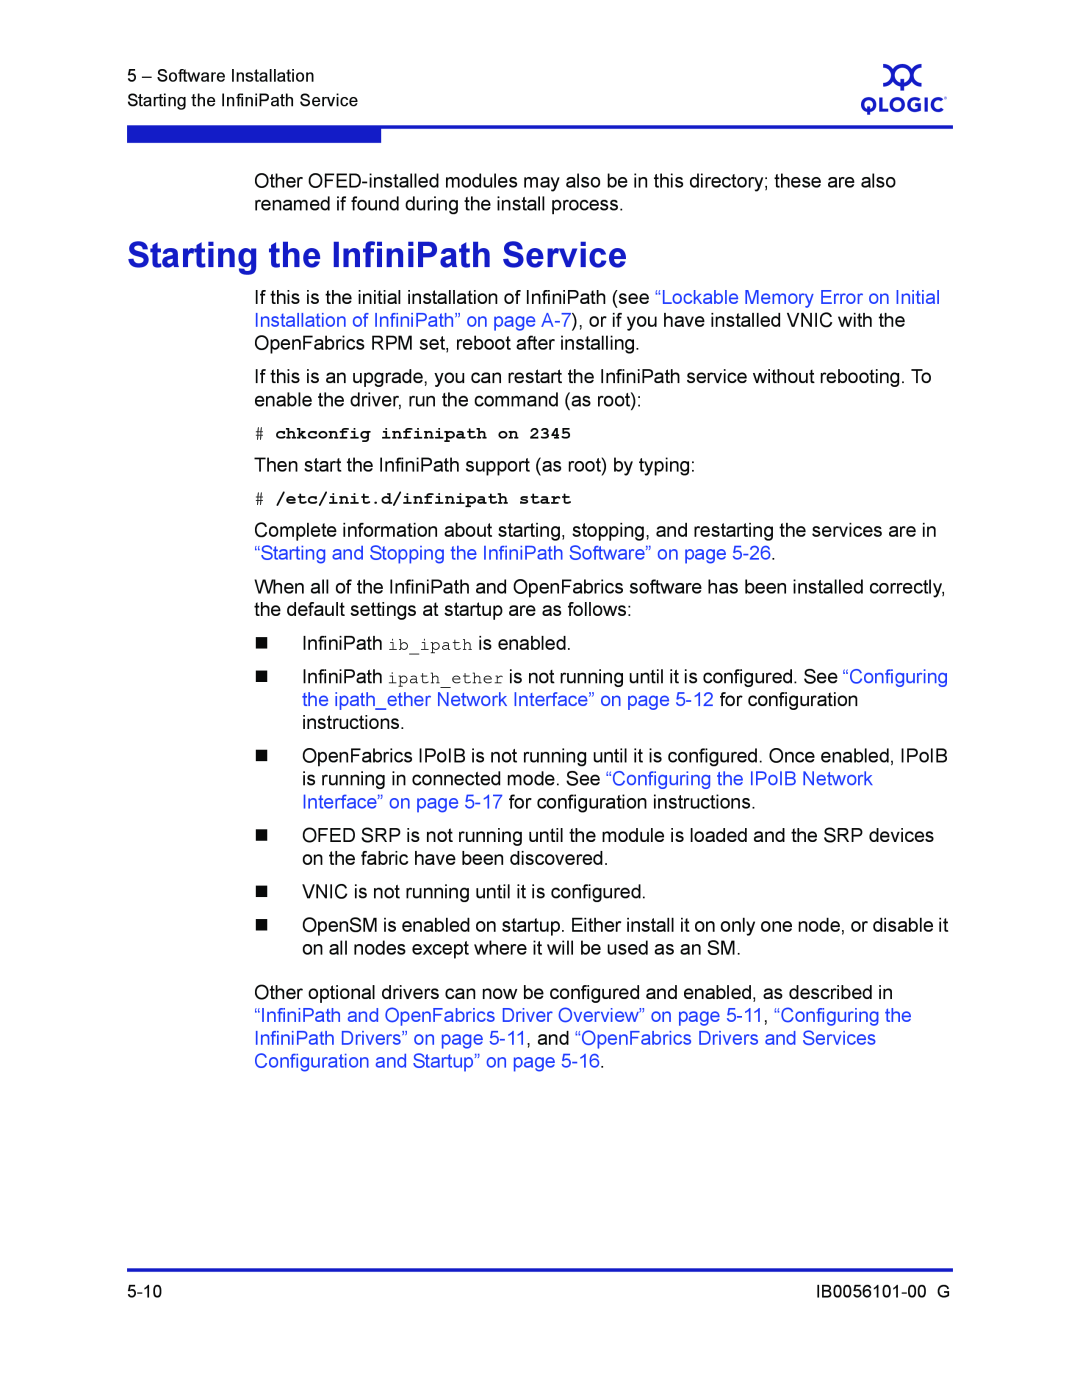 Q-Logic IB0056101-00 G manual Starting the InfiniPath Service 